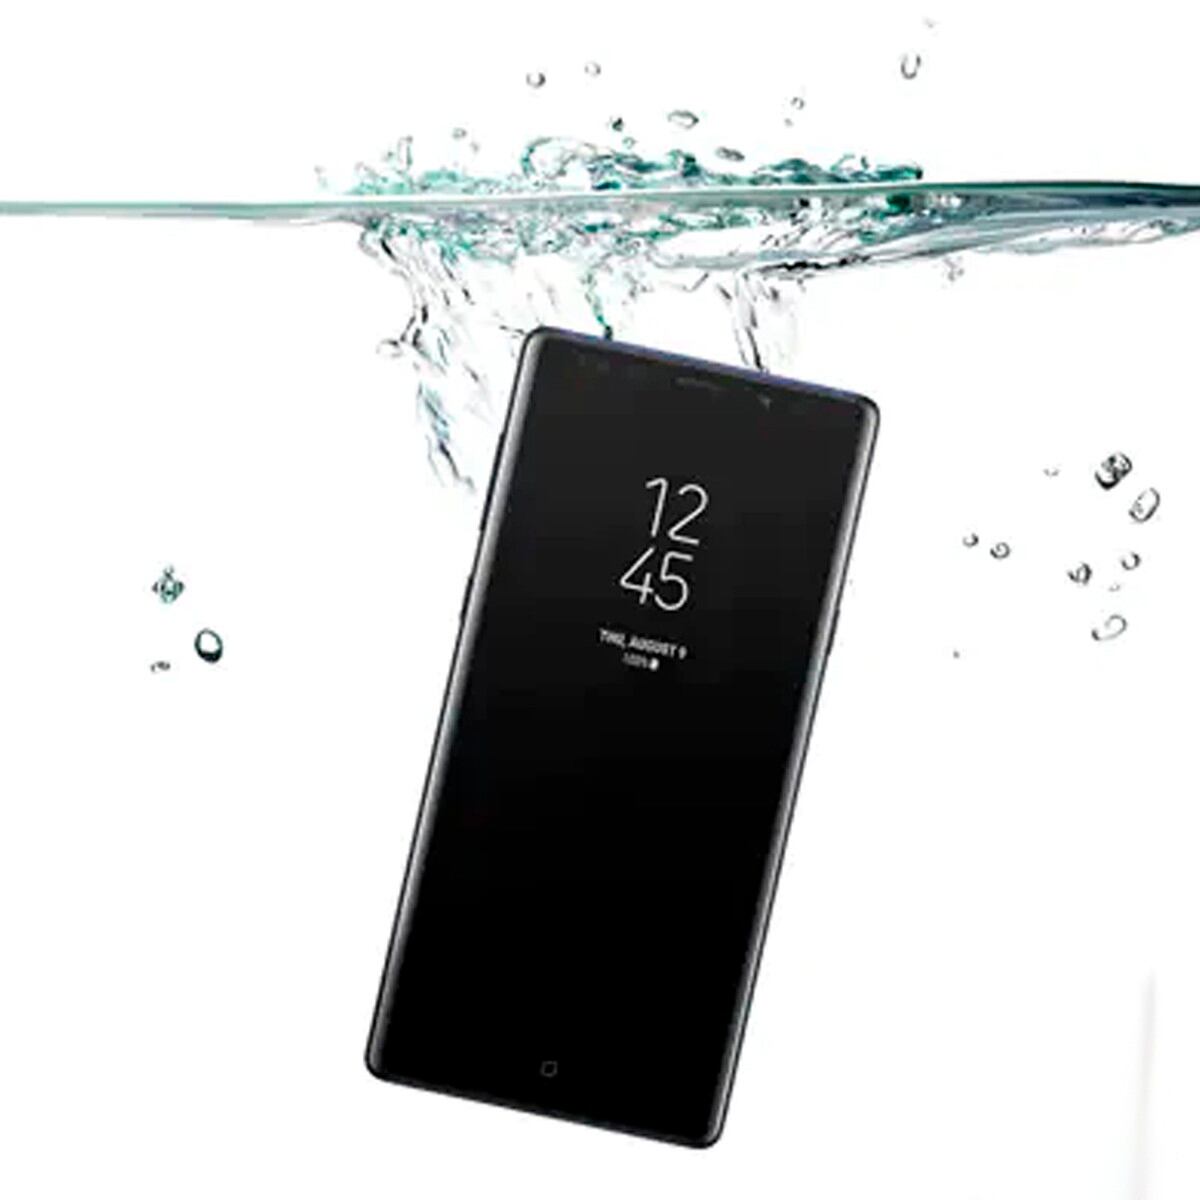 Samsung, Listado de celulares que son resistentes al agua, IP68, IP67, nnda, nnni, DATA